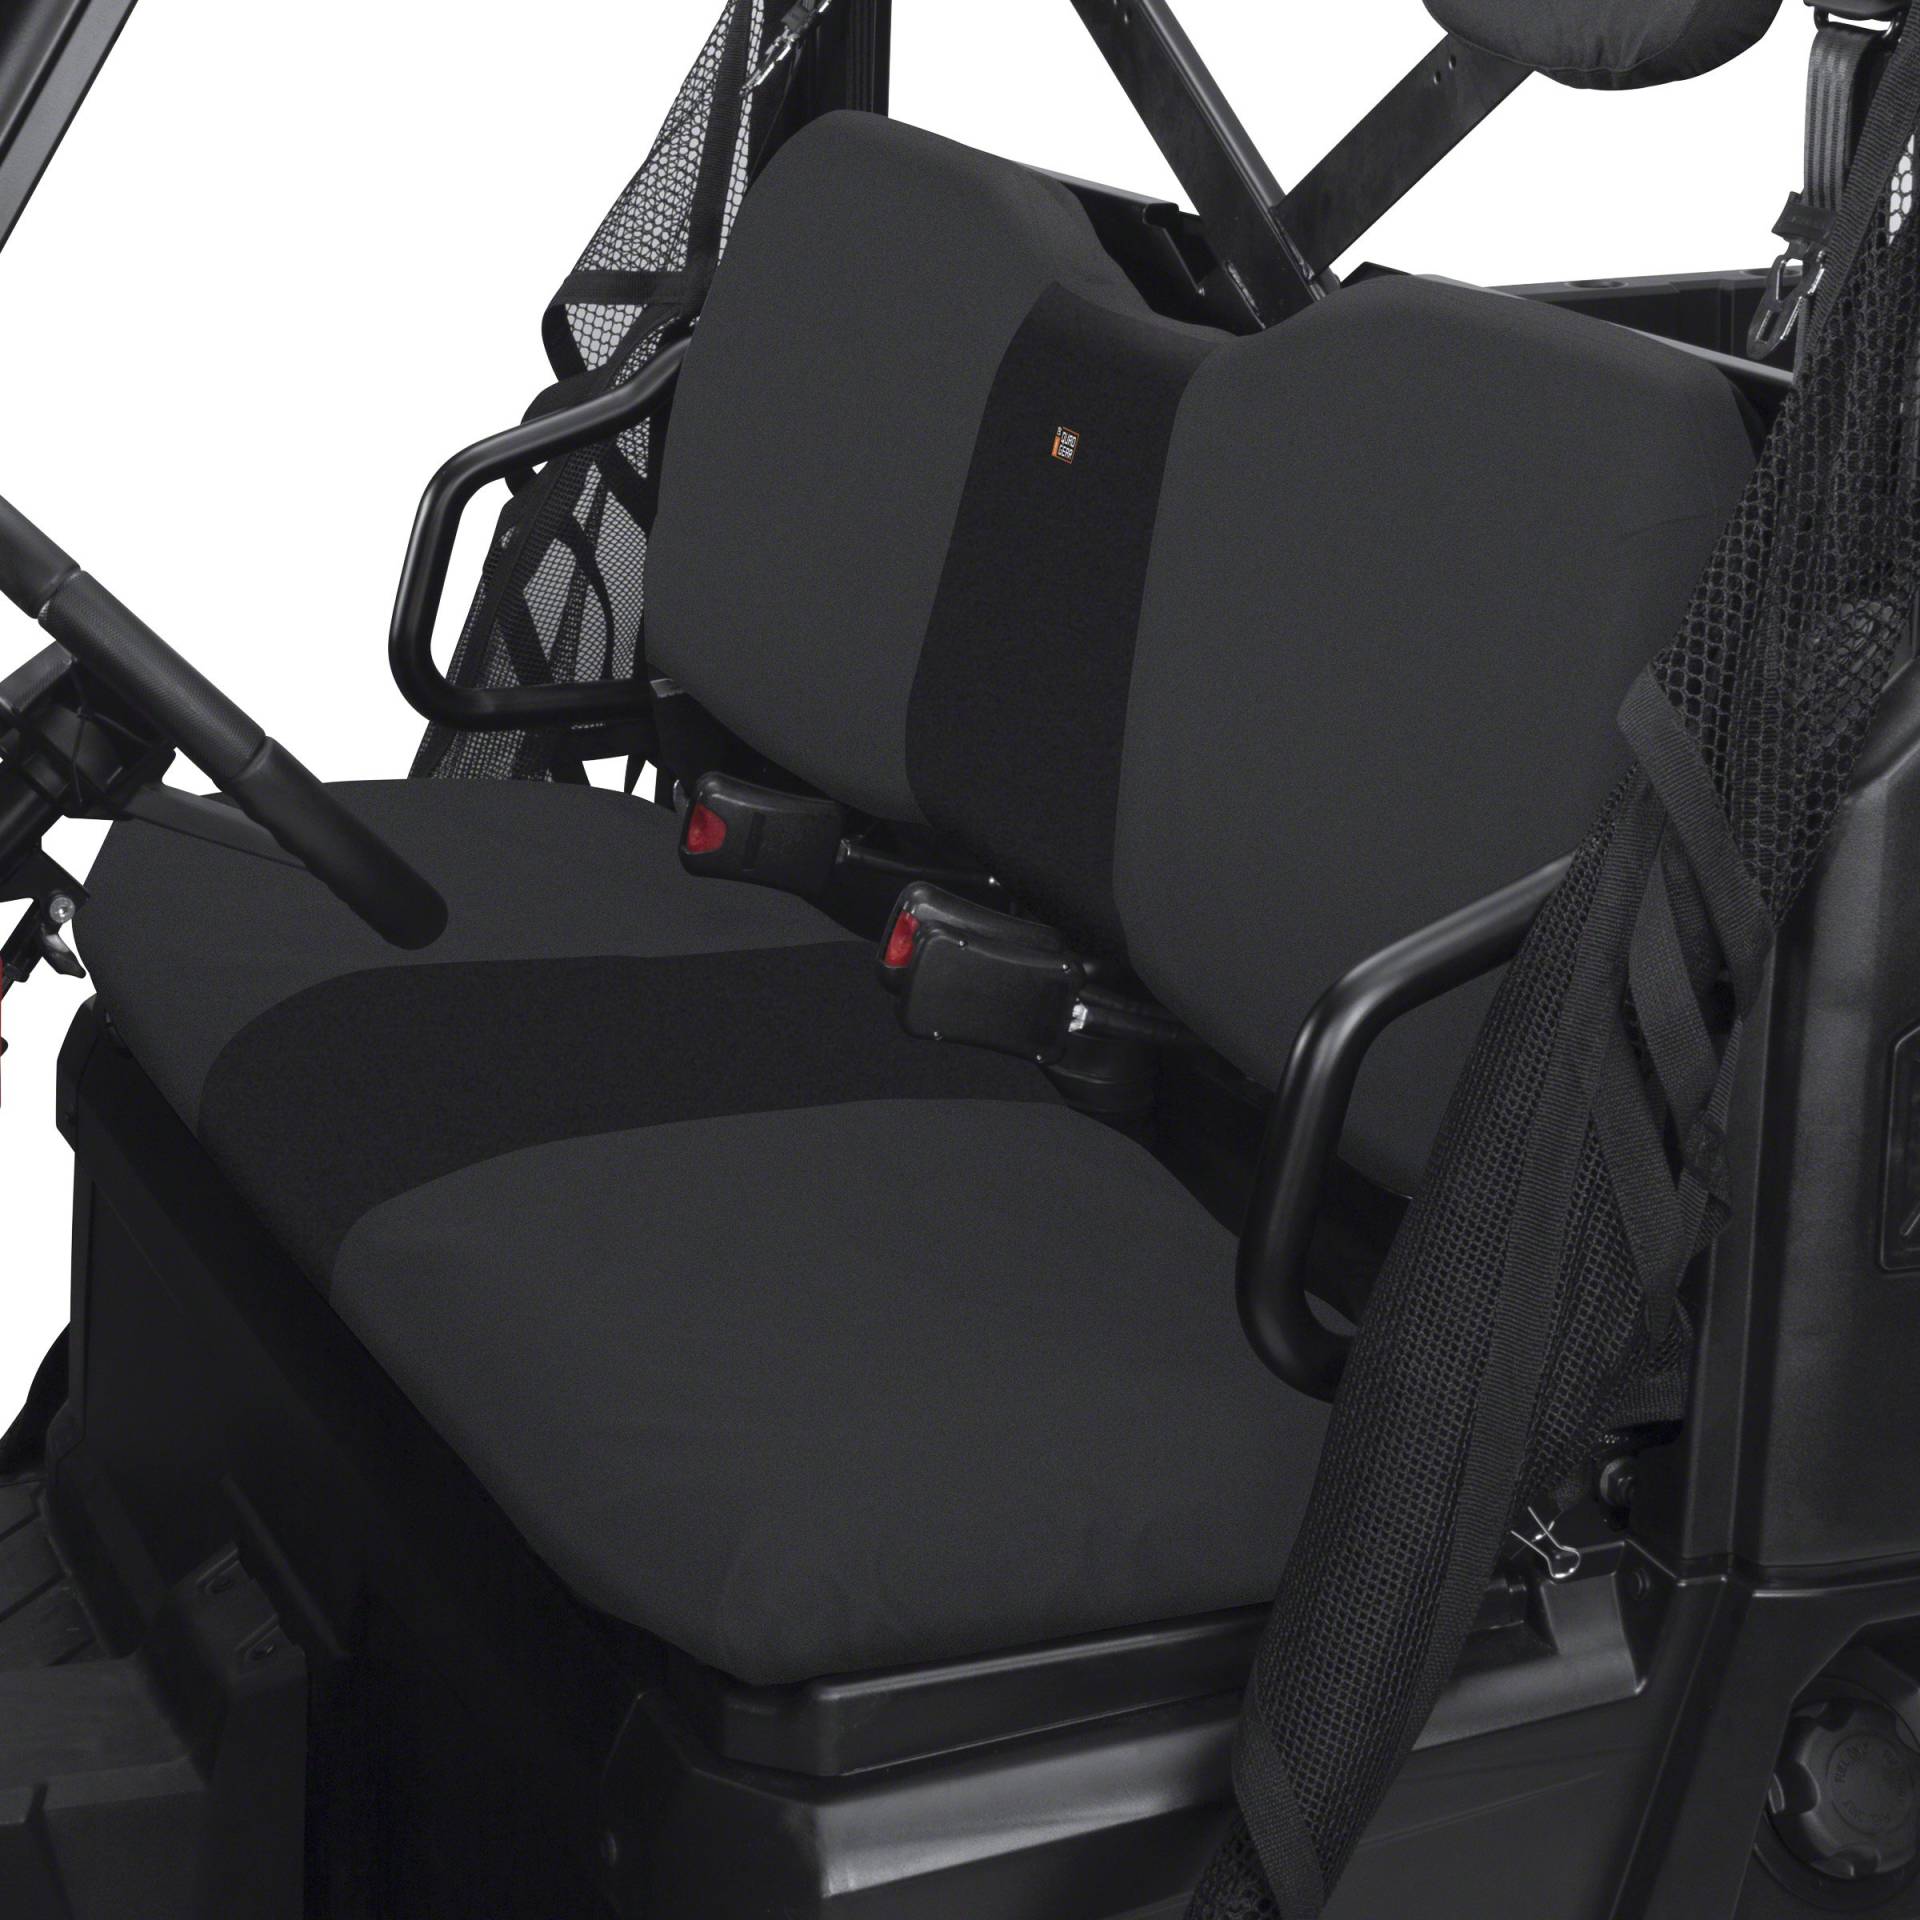 Classic Accessories QuadGear UTV Seat Cover for Polaris Ranger XP/HD (Bench), Black - 18-026-010401-00 55 L x 15 W x 17 5 H von CLASSIC ACCESSORIES